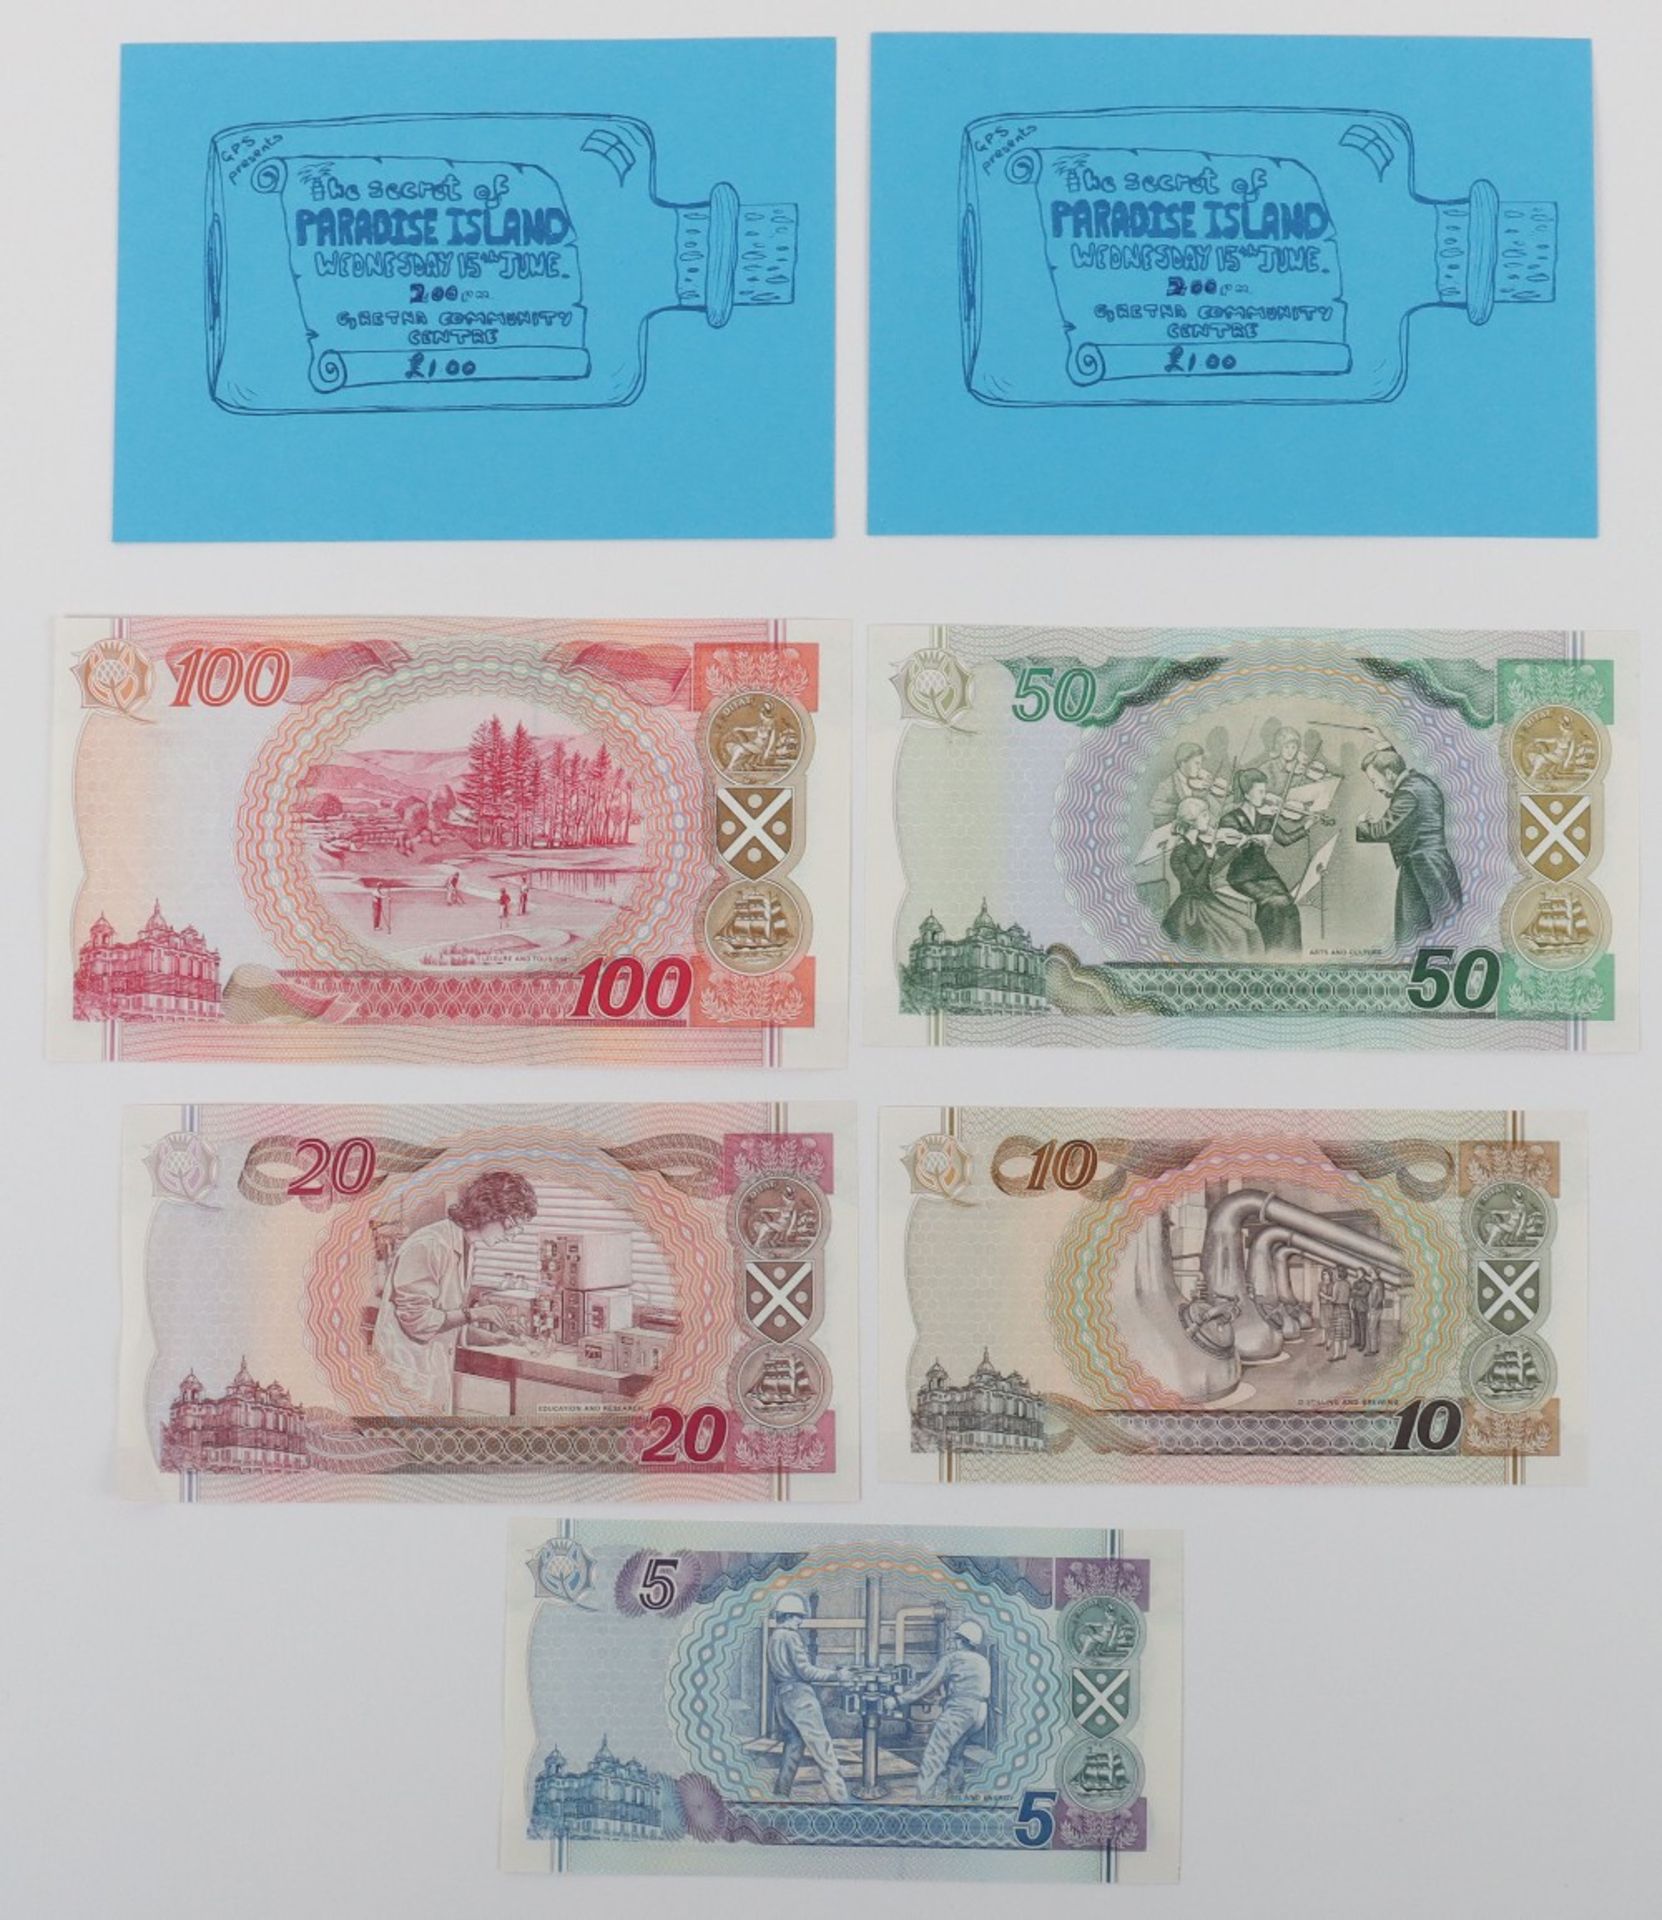 Bank of Scotland, 100 Pound banknote (AA017360), 50 Pound (AA086010) - Image 2 of 2